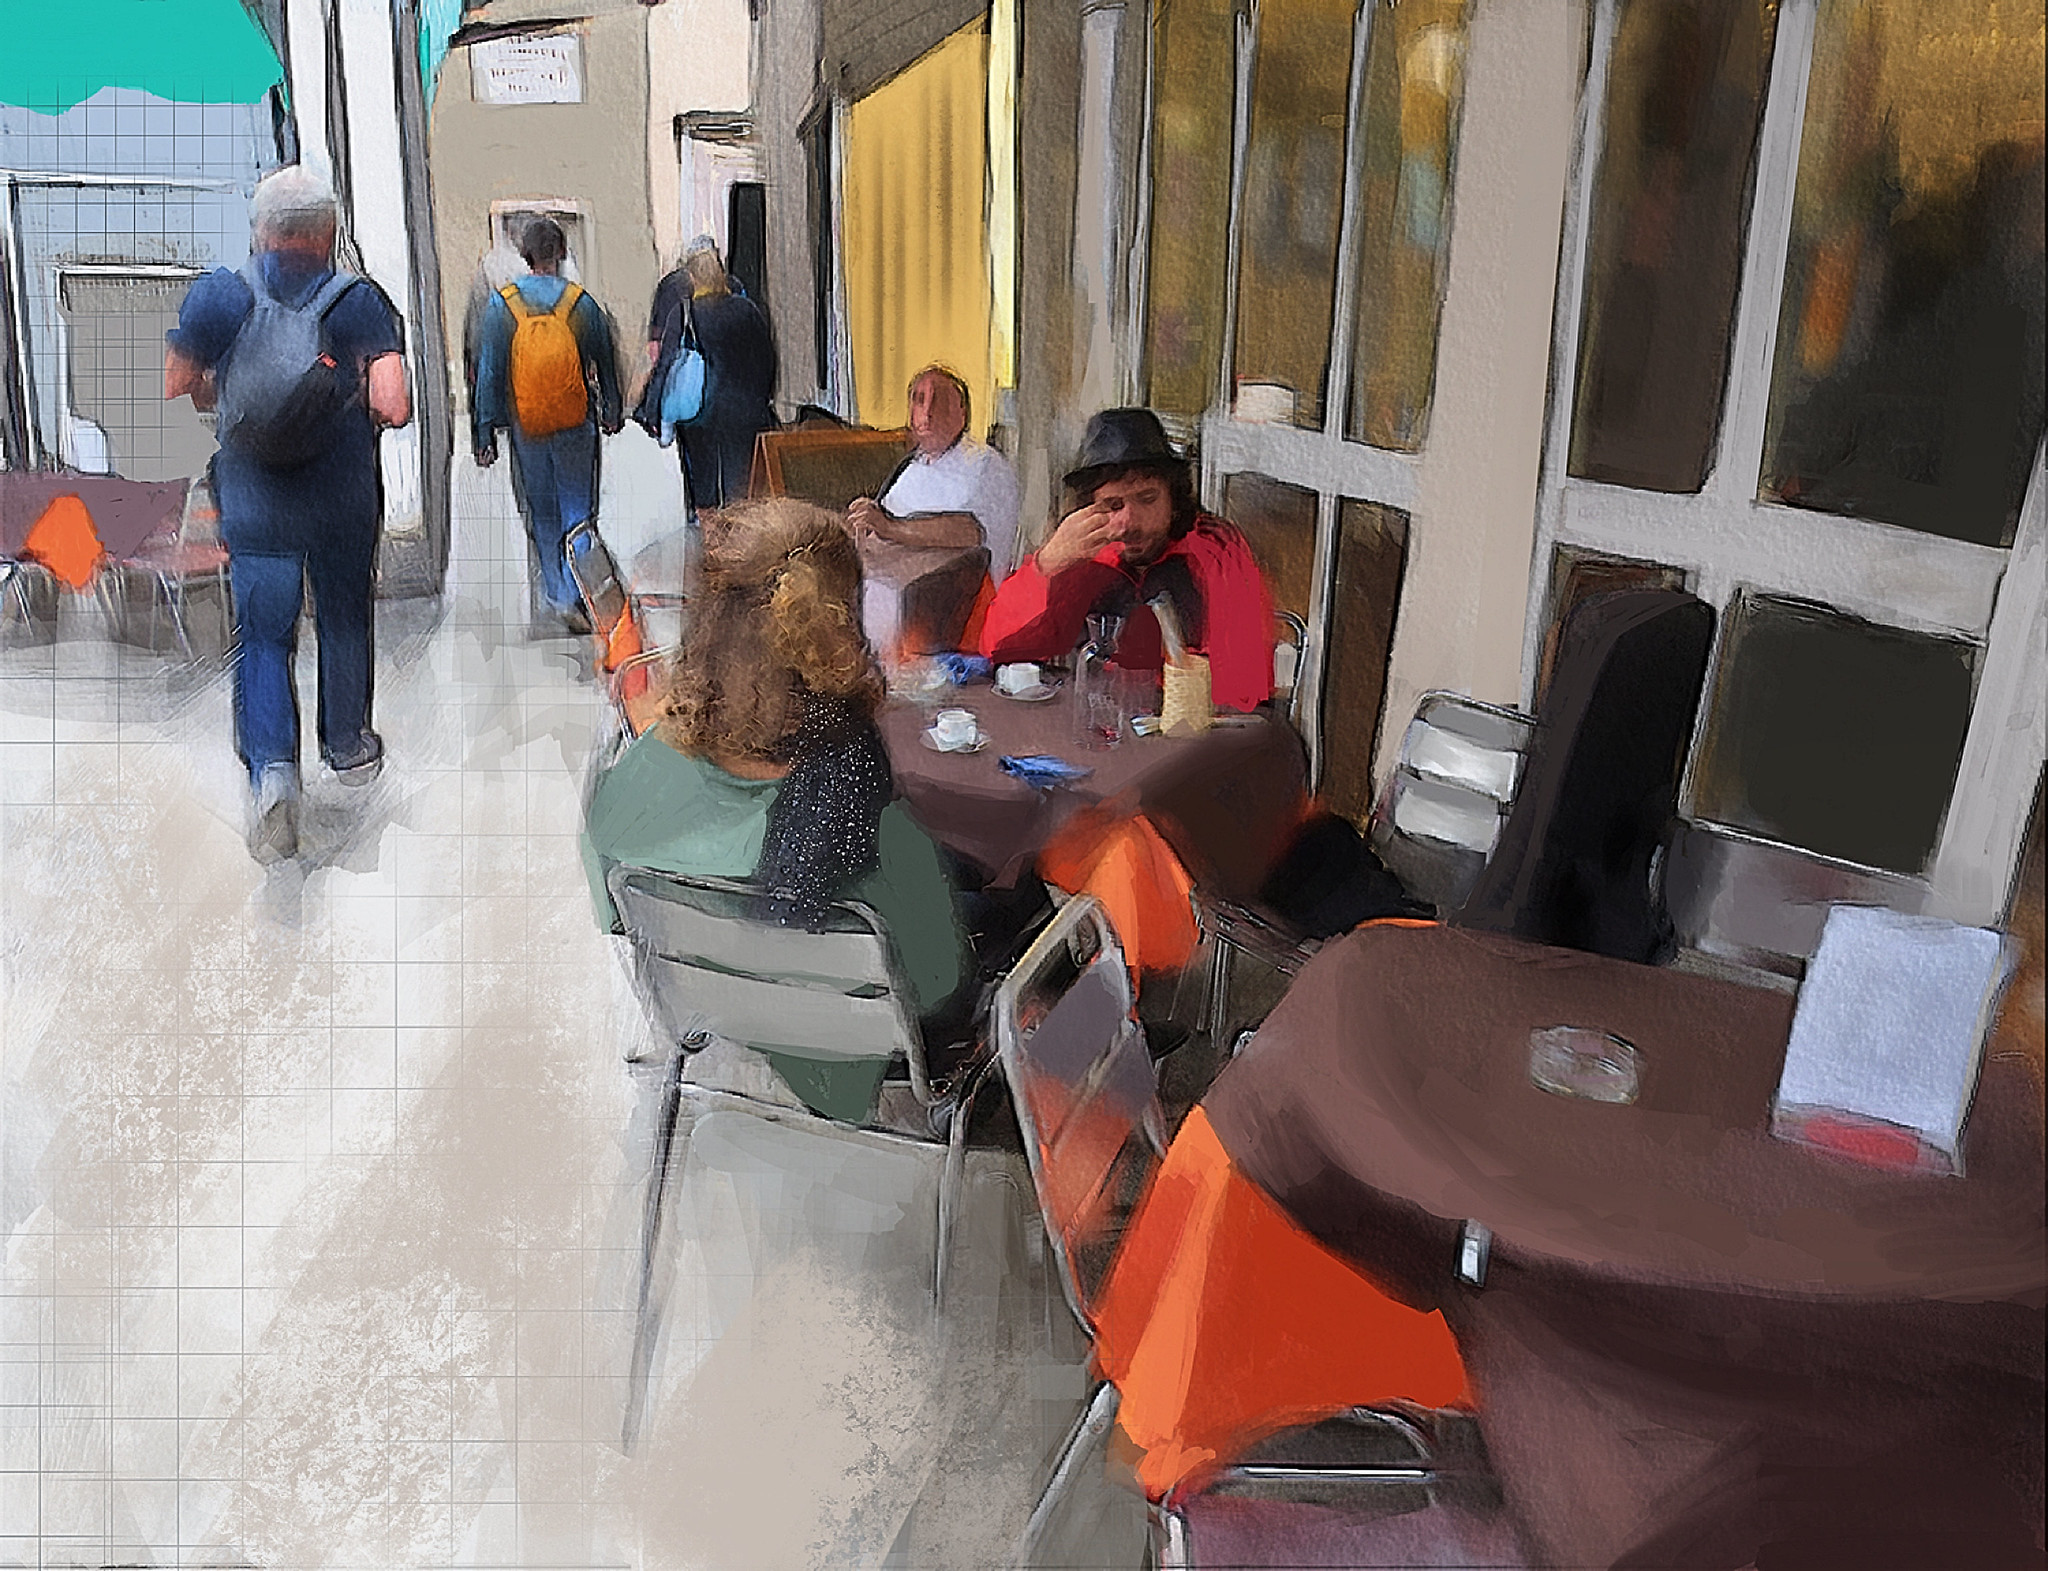 The sidewalk cafe. Venice